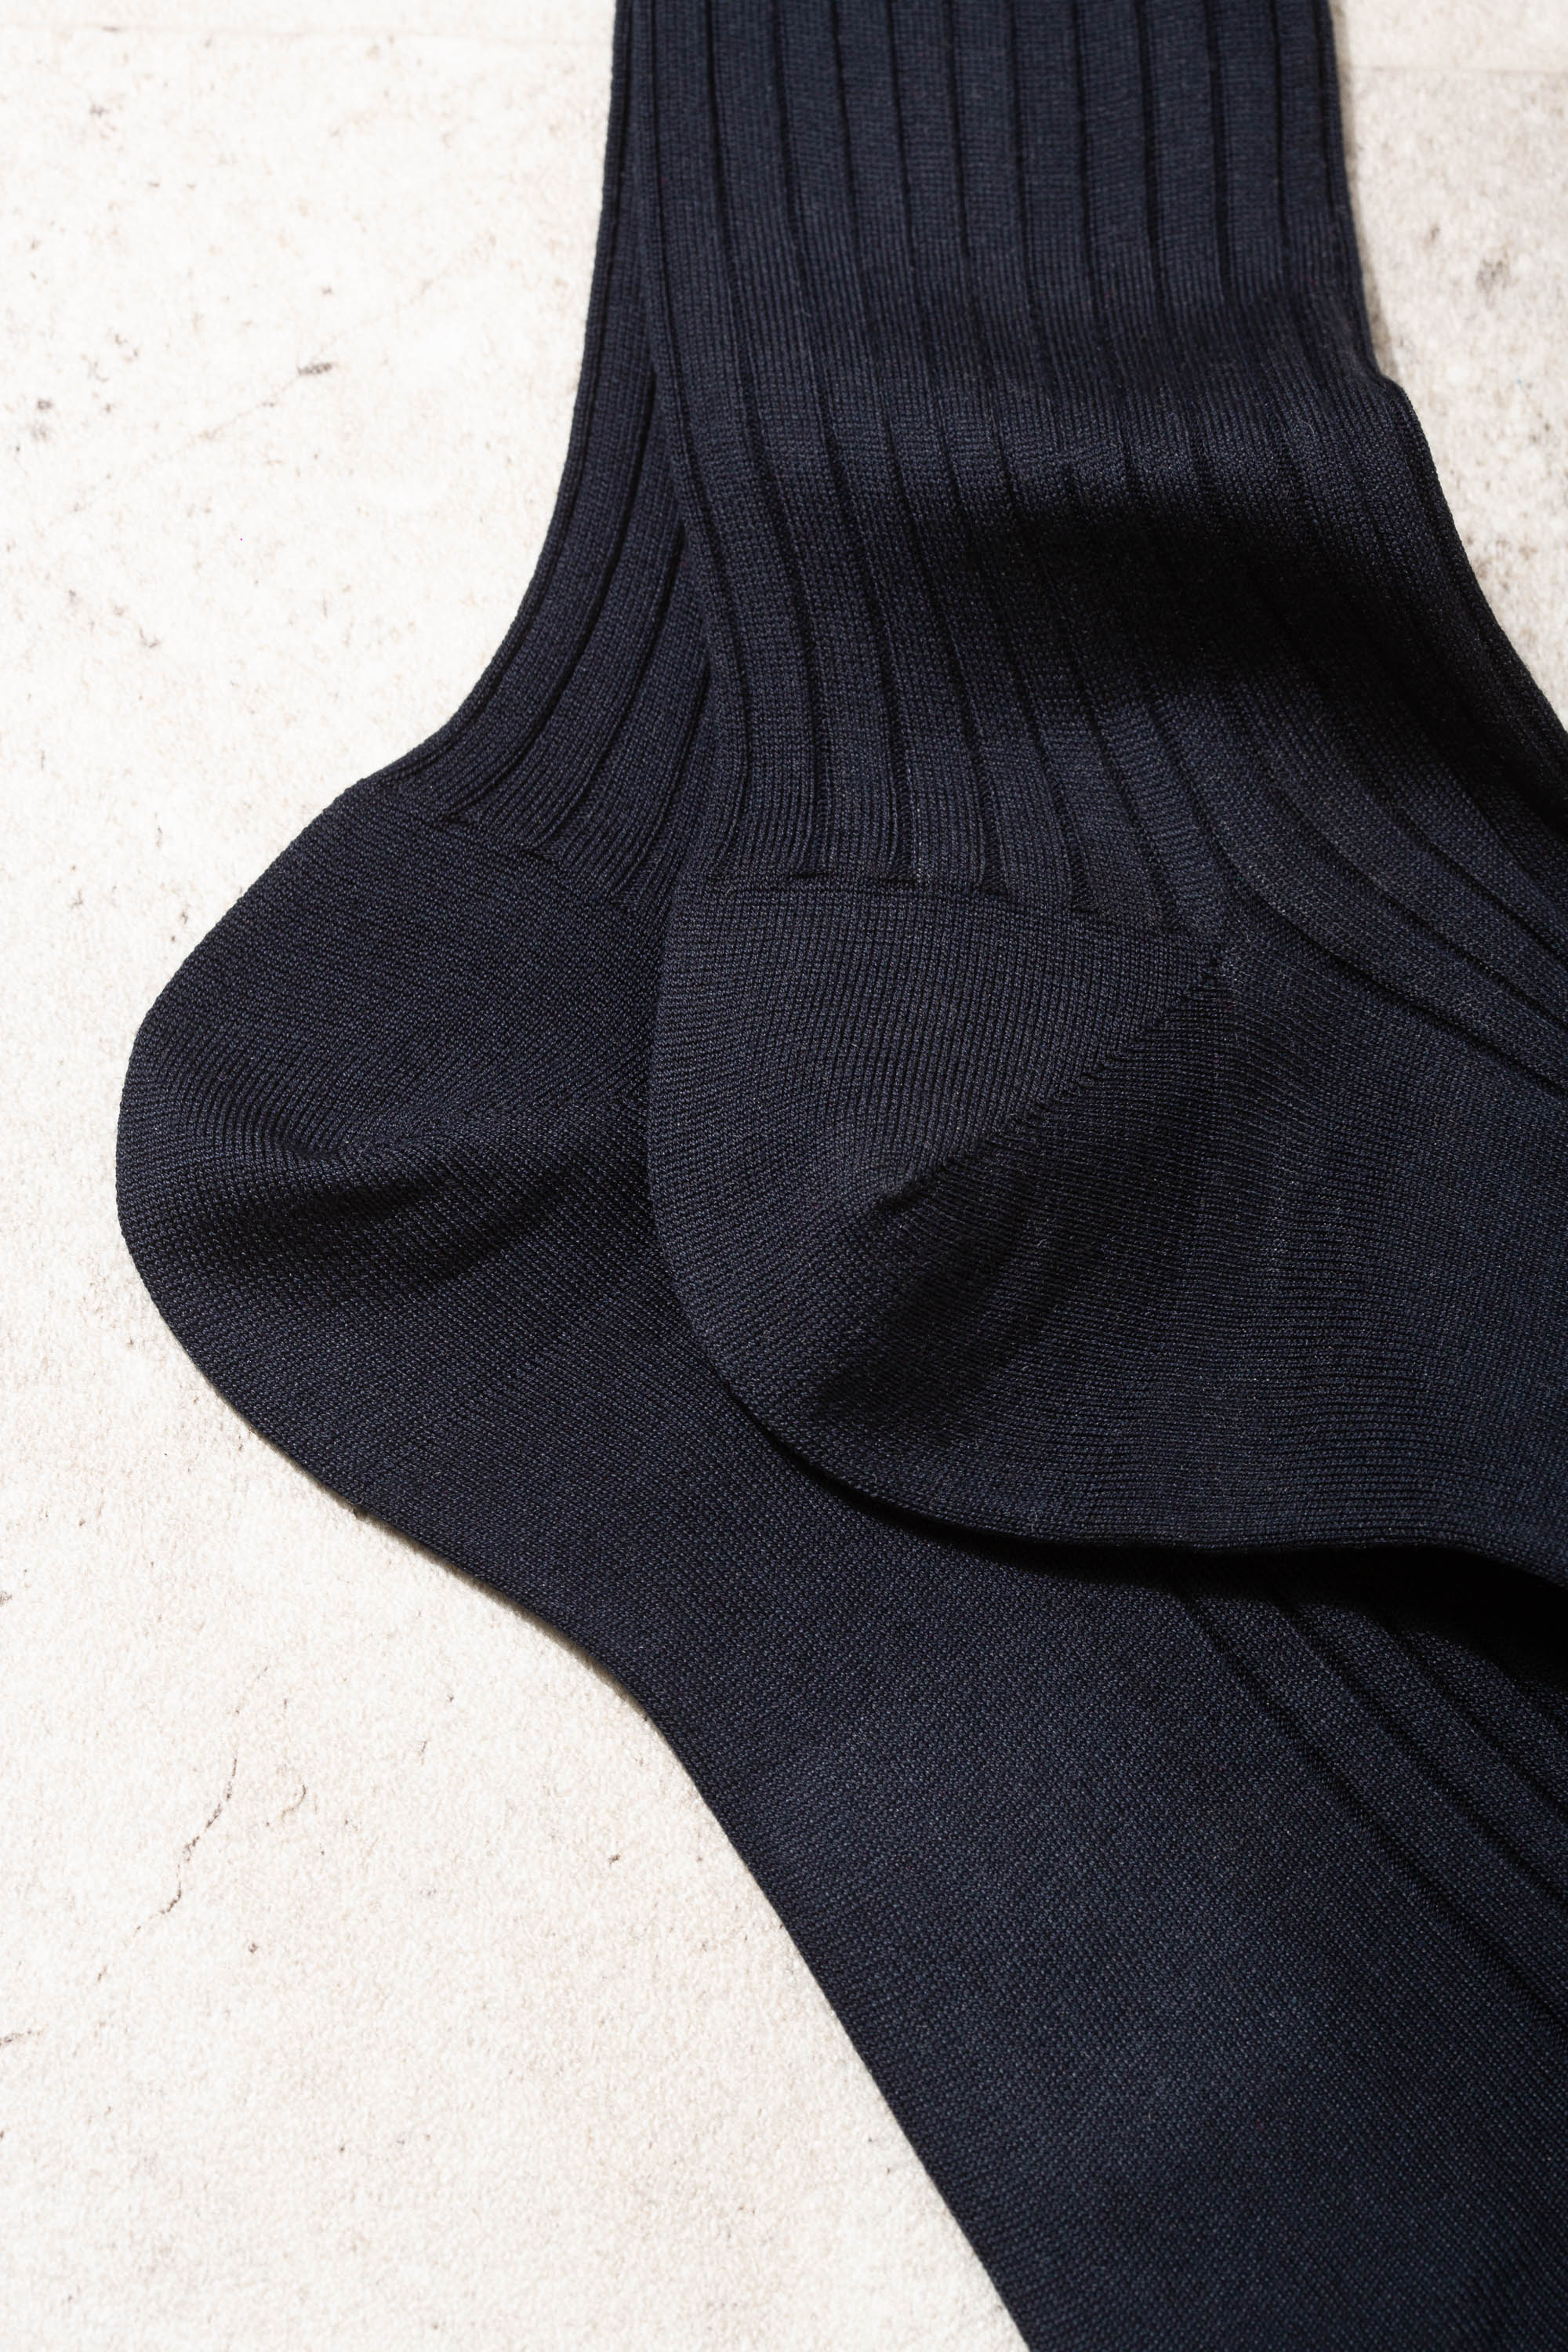 Blue long Socks - Made in Italy